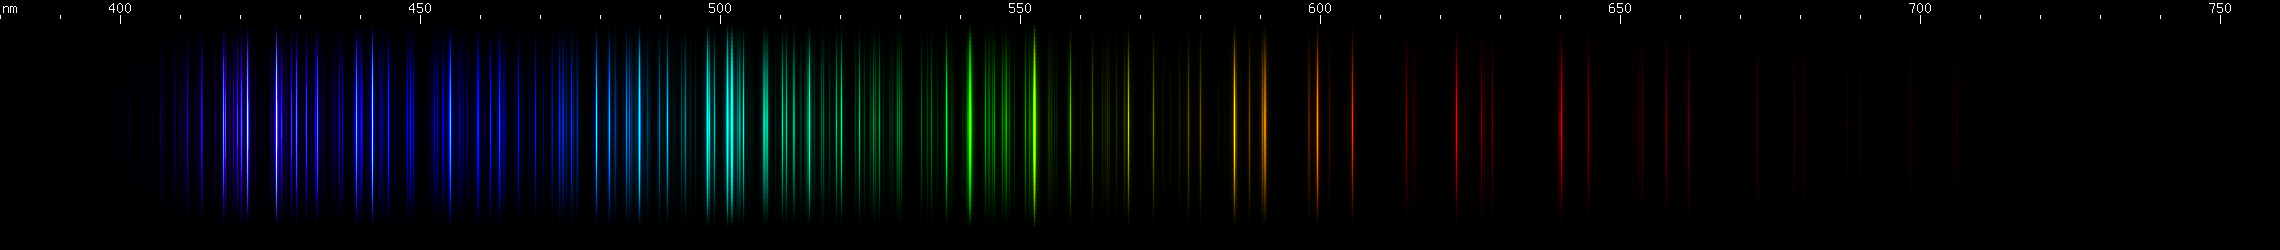 Spectral lines of Osmium.